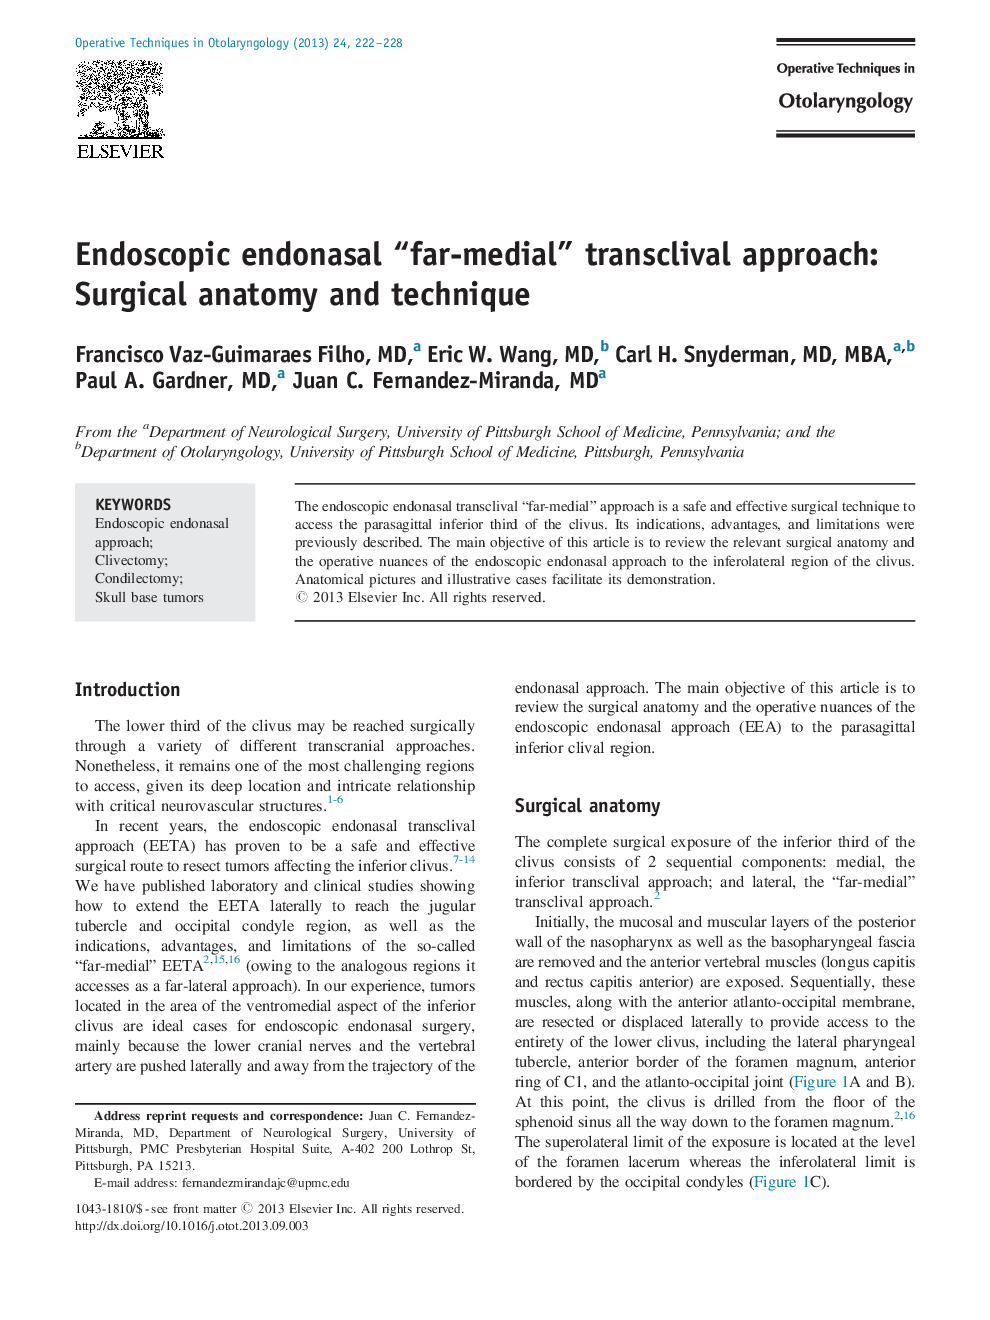 Endoscopic endonasal “far-medial” transclival approach: Surgical anatomy and technique